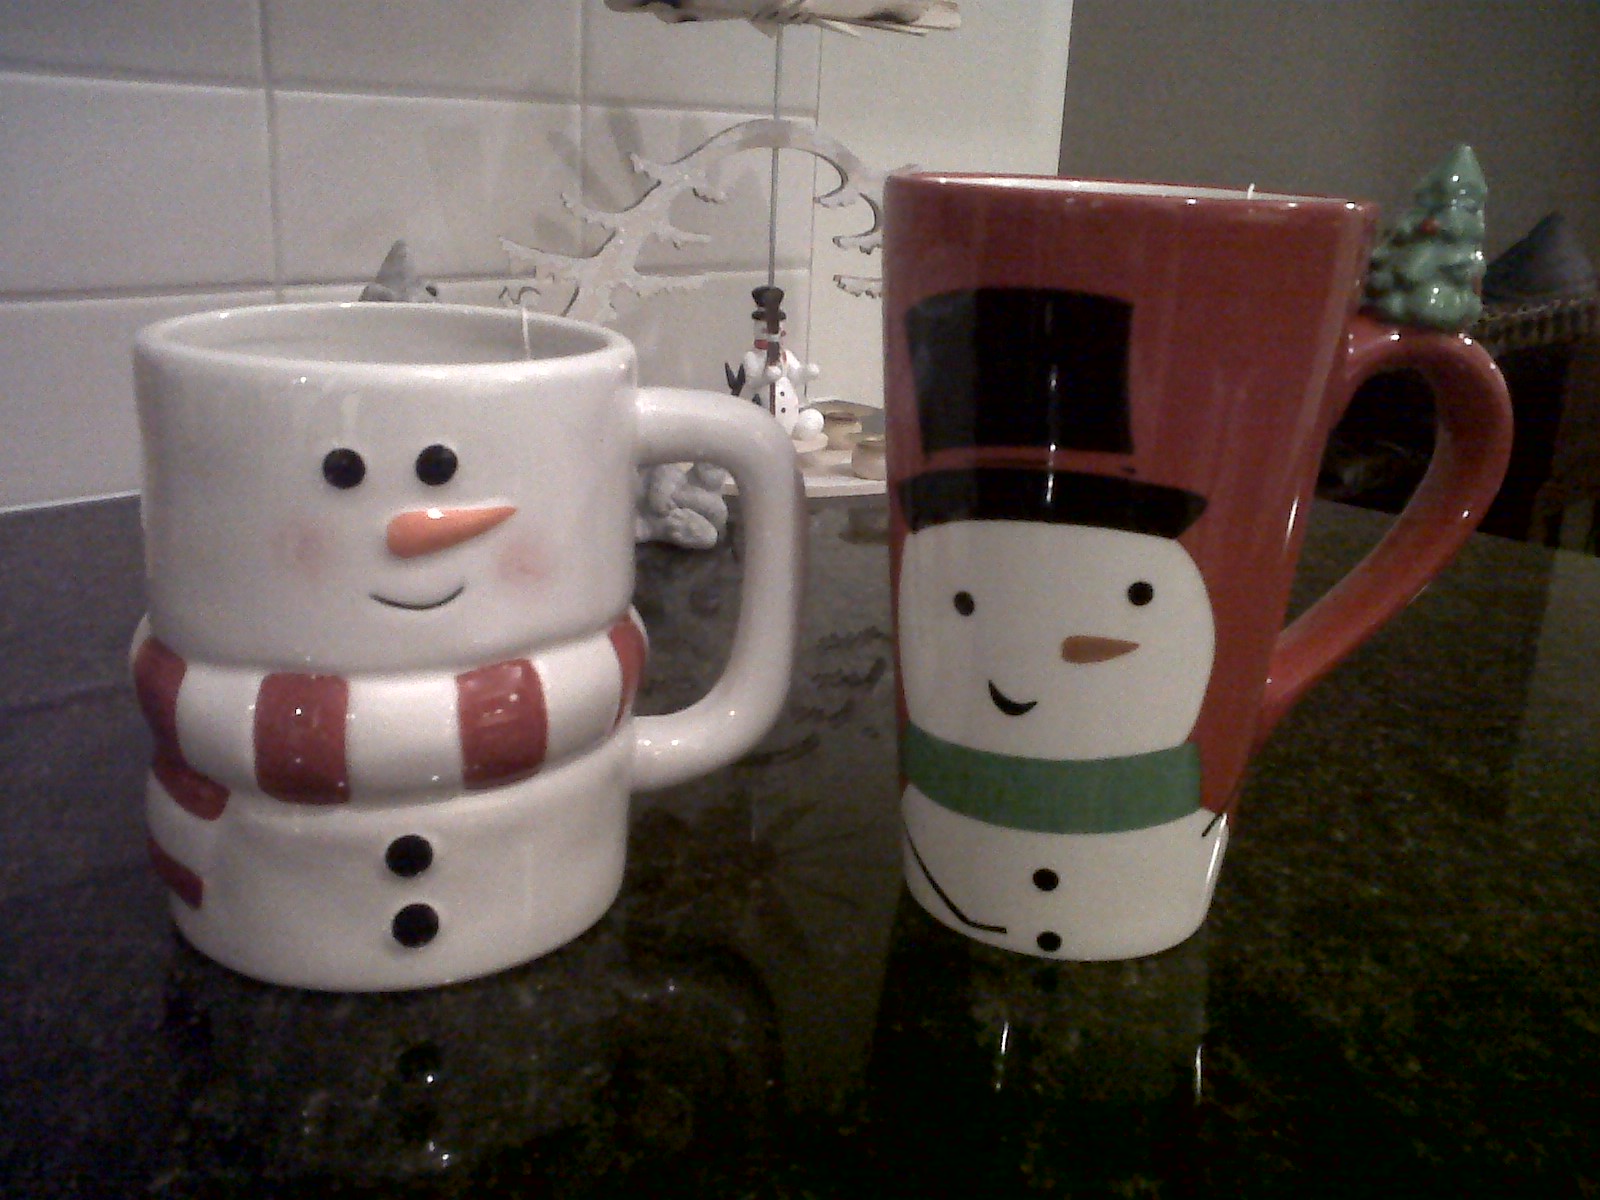 snowman mugs